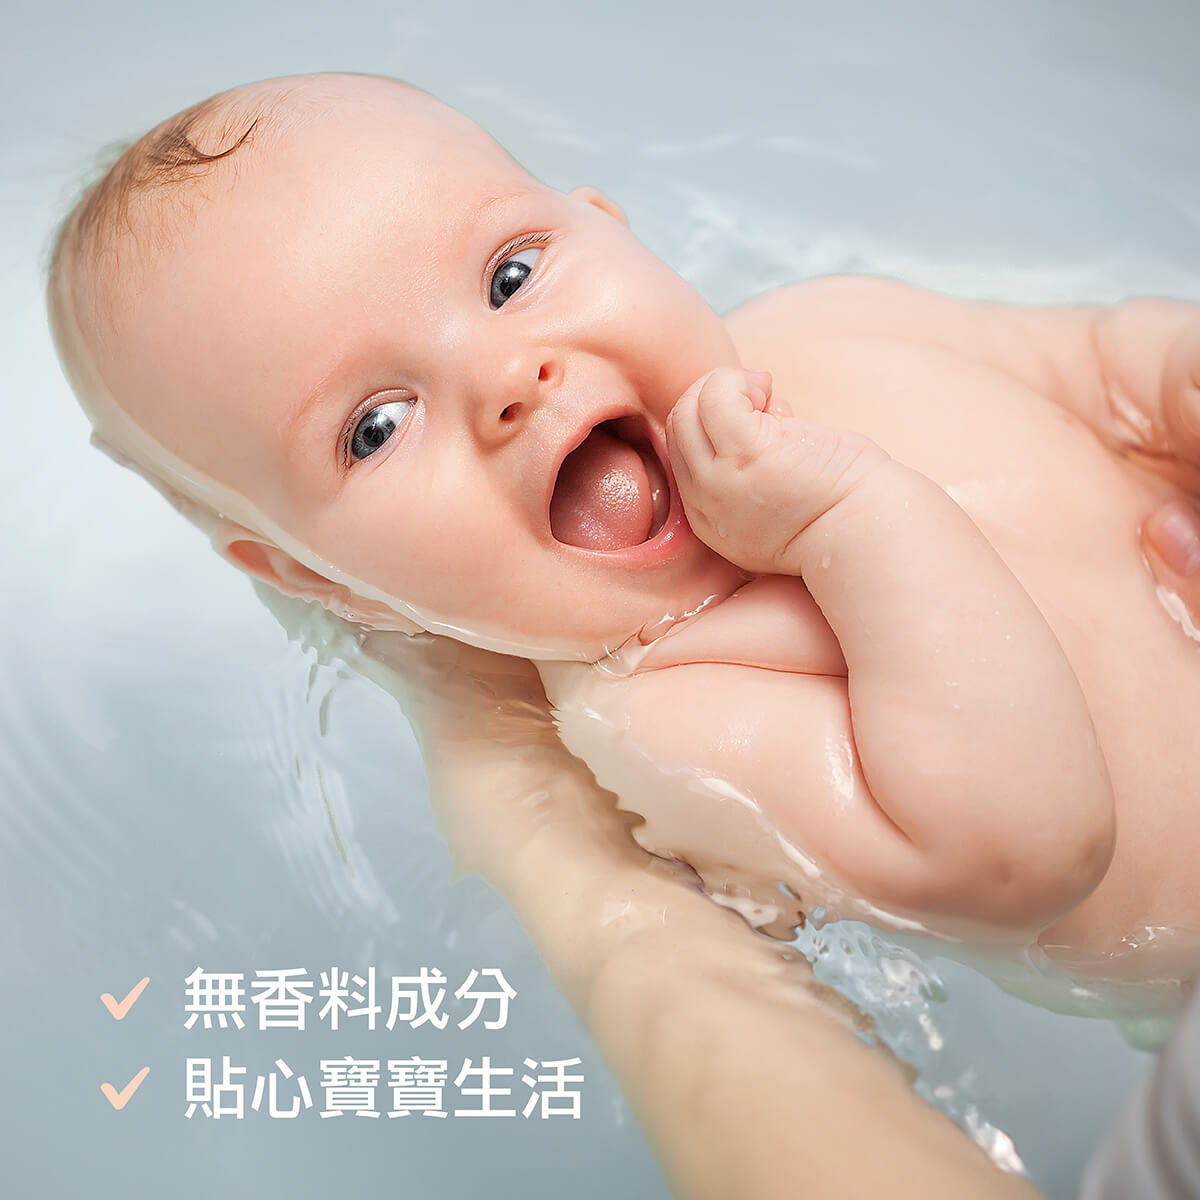 Douce Nature 地恩,媽媽寶寶清潔用品,呵護寶寶脆弱肌,媽咪們可以不假思索的選擇Douce Nature.低泡沫,無皂鹼的溫和成分呵護寶寶的肌膚.